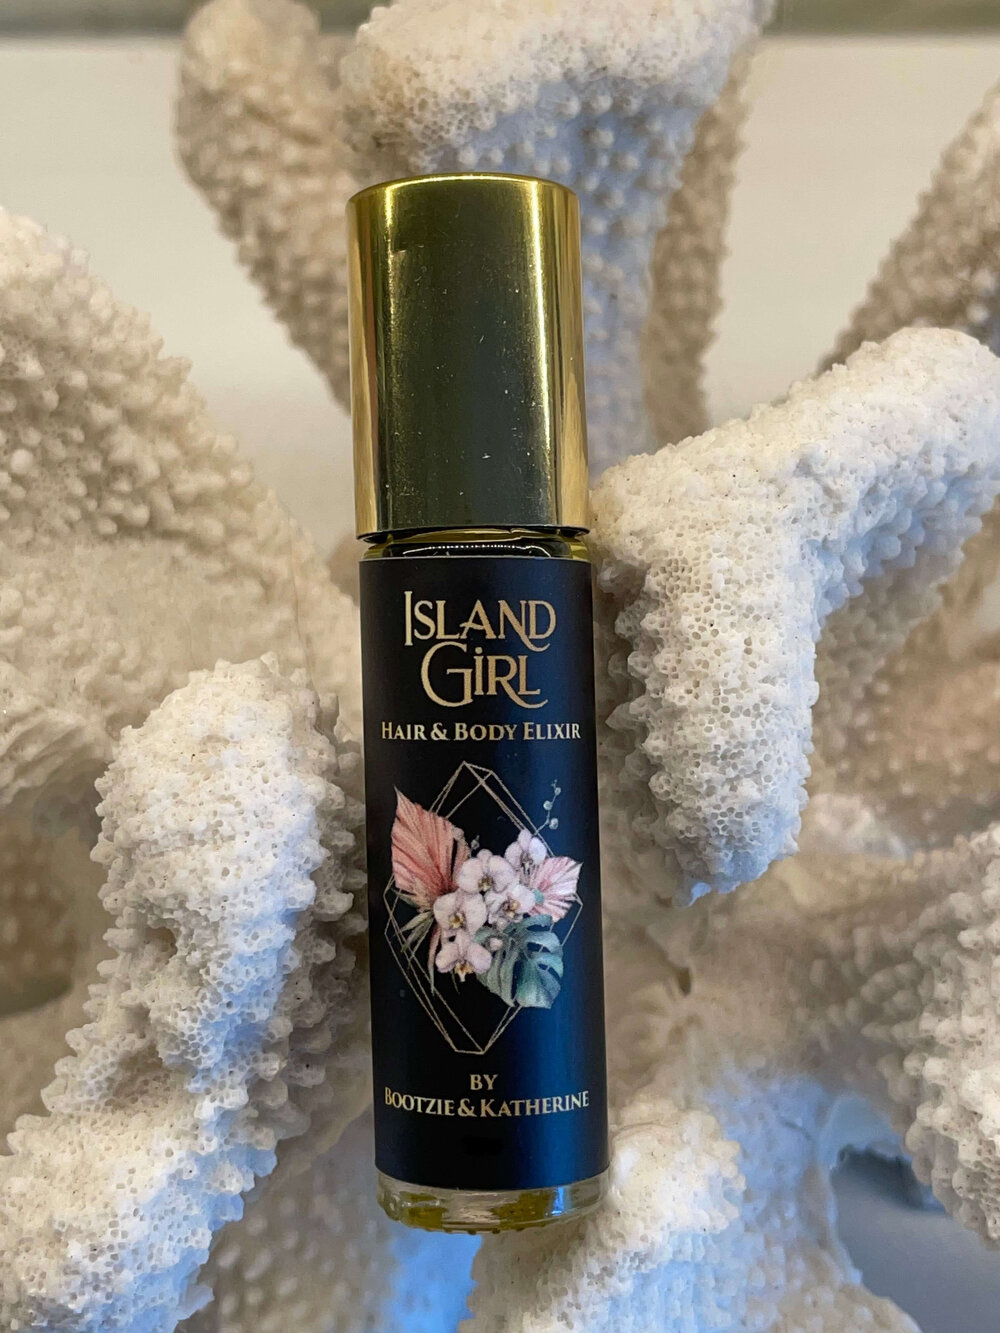 Elemental Perfume Blend with Essential Oils: Earth Goddess Perfume Recipe